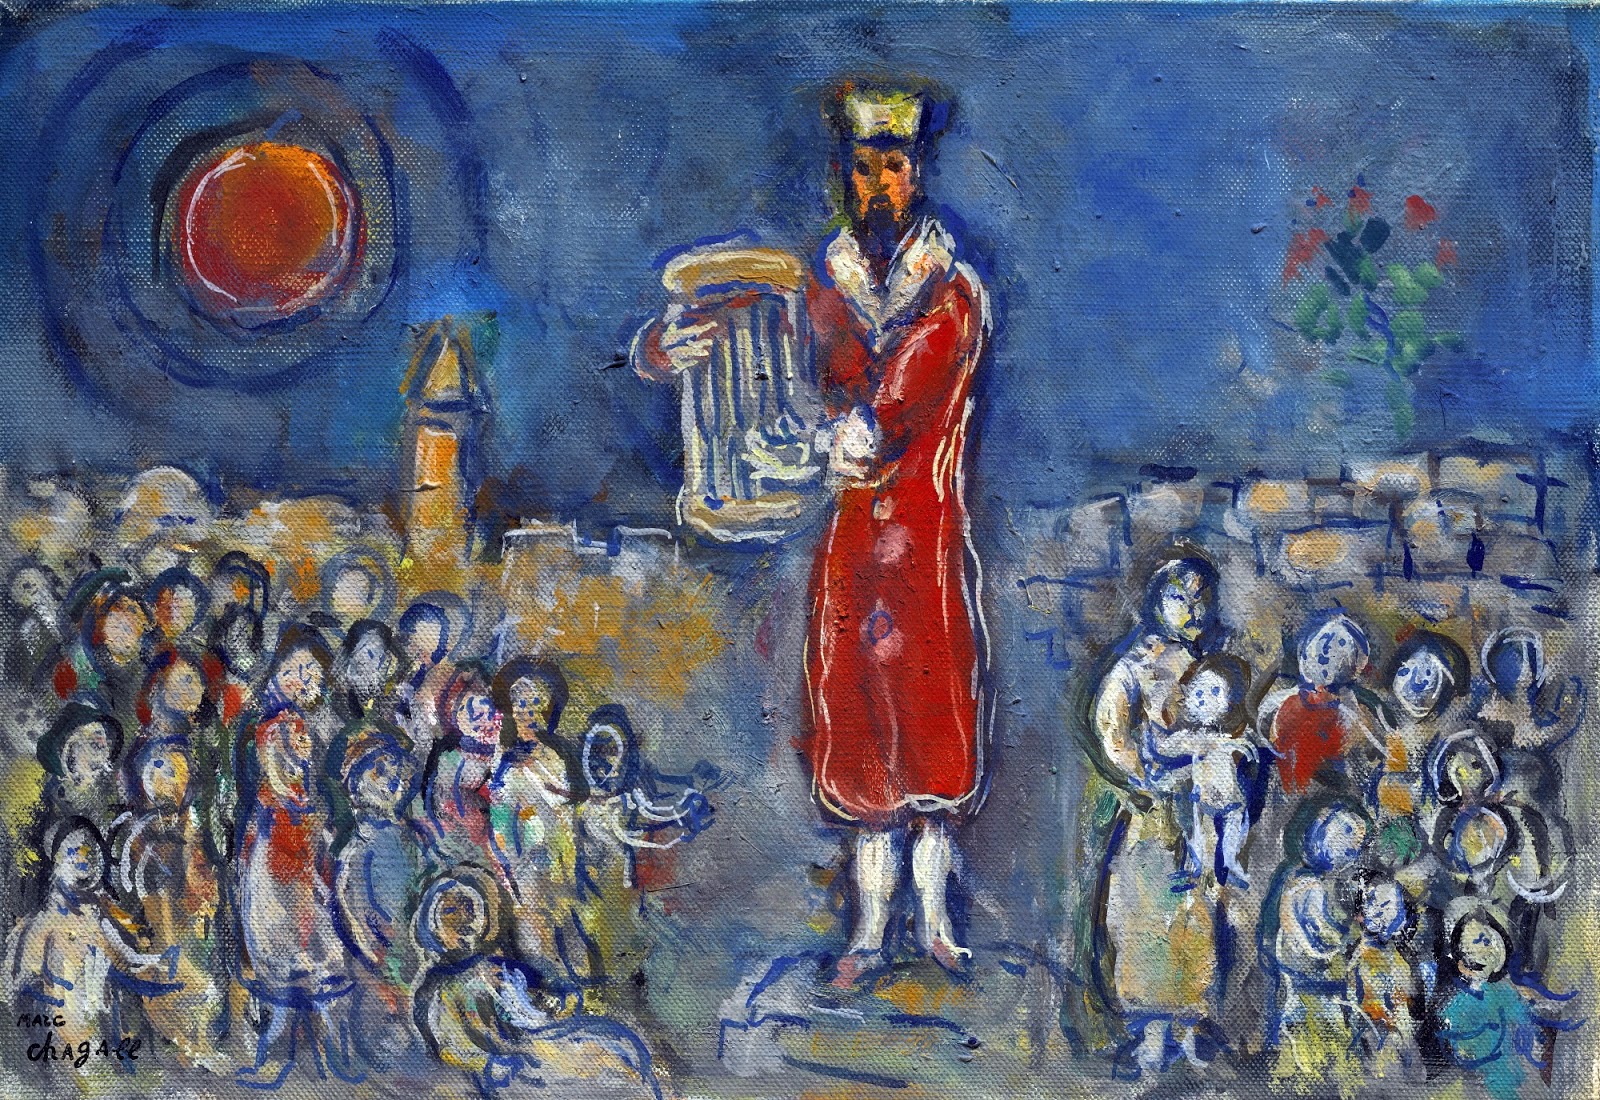 Marc+Chagall-1887-1985 (288).jpg